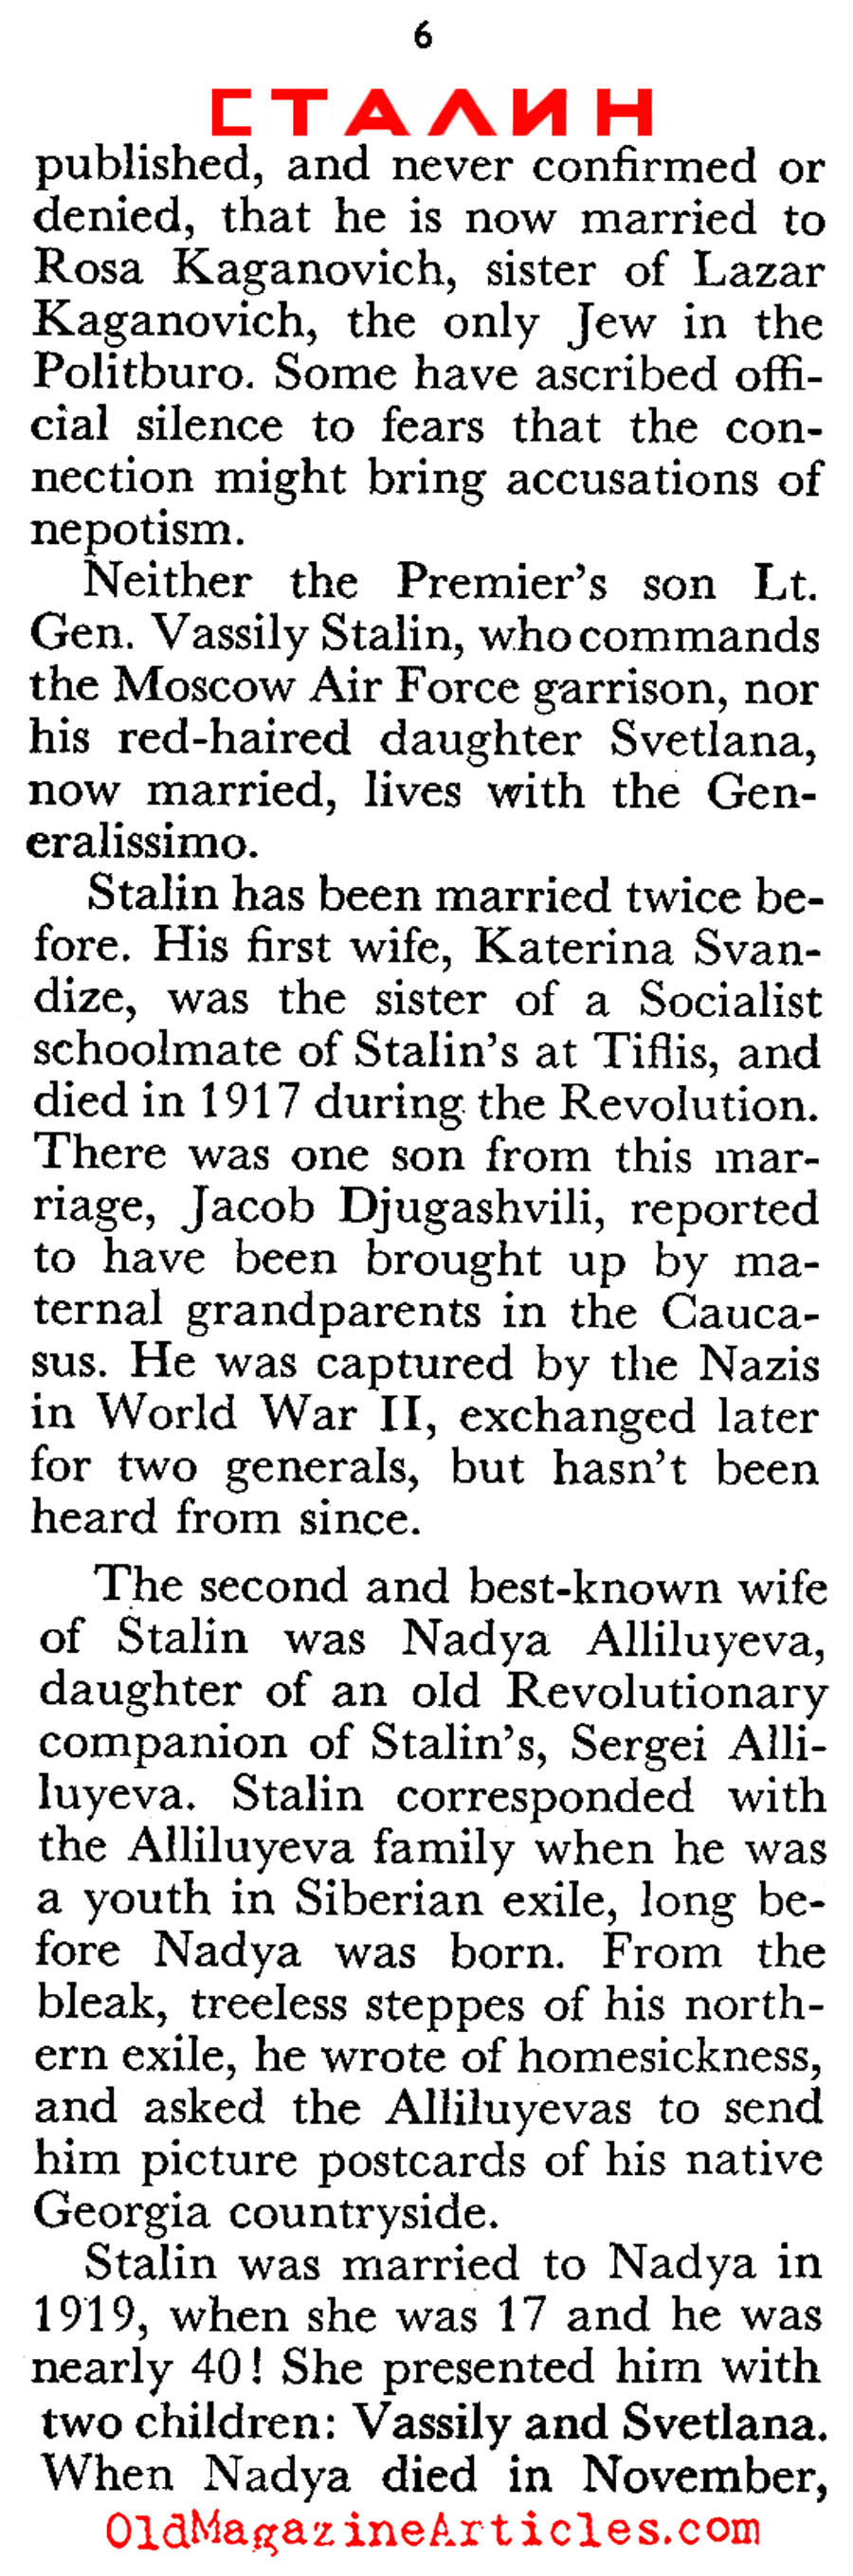 Stalin at 72 (Coronet Magazine, 1952)